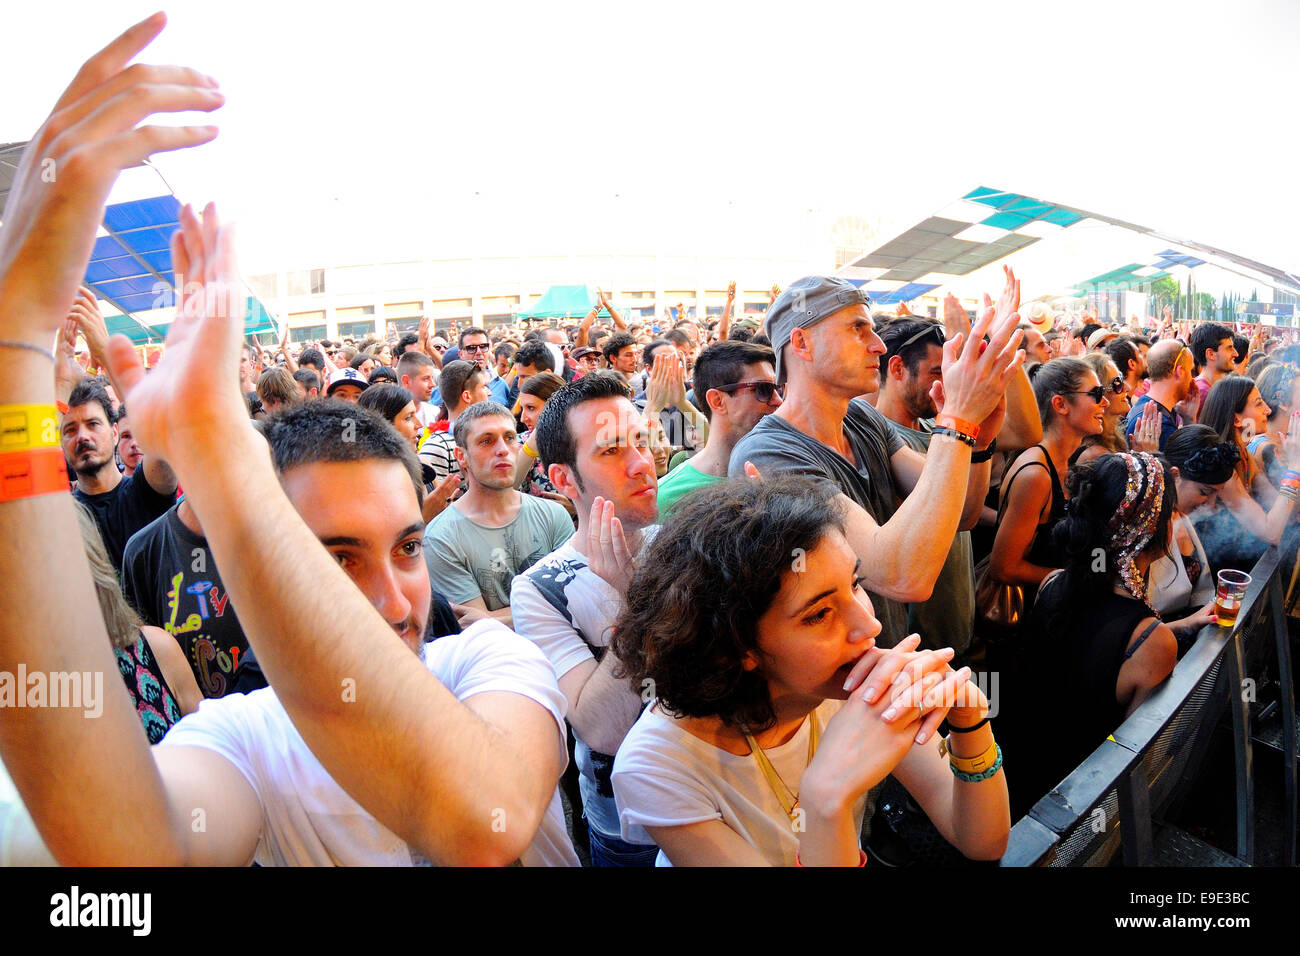 BARCELONA - 12 JUN: Publikum beim Sonar Festival am 12. Juni 2014 in Barcelona, Spanien. Stockfoto